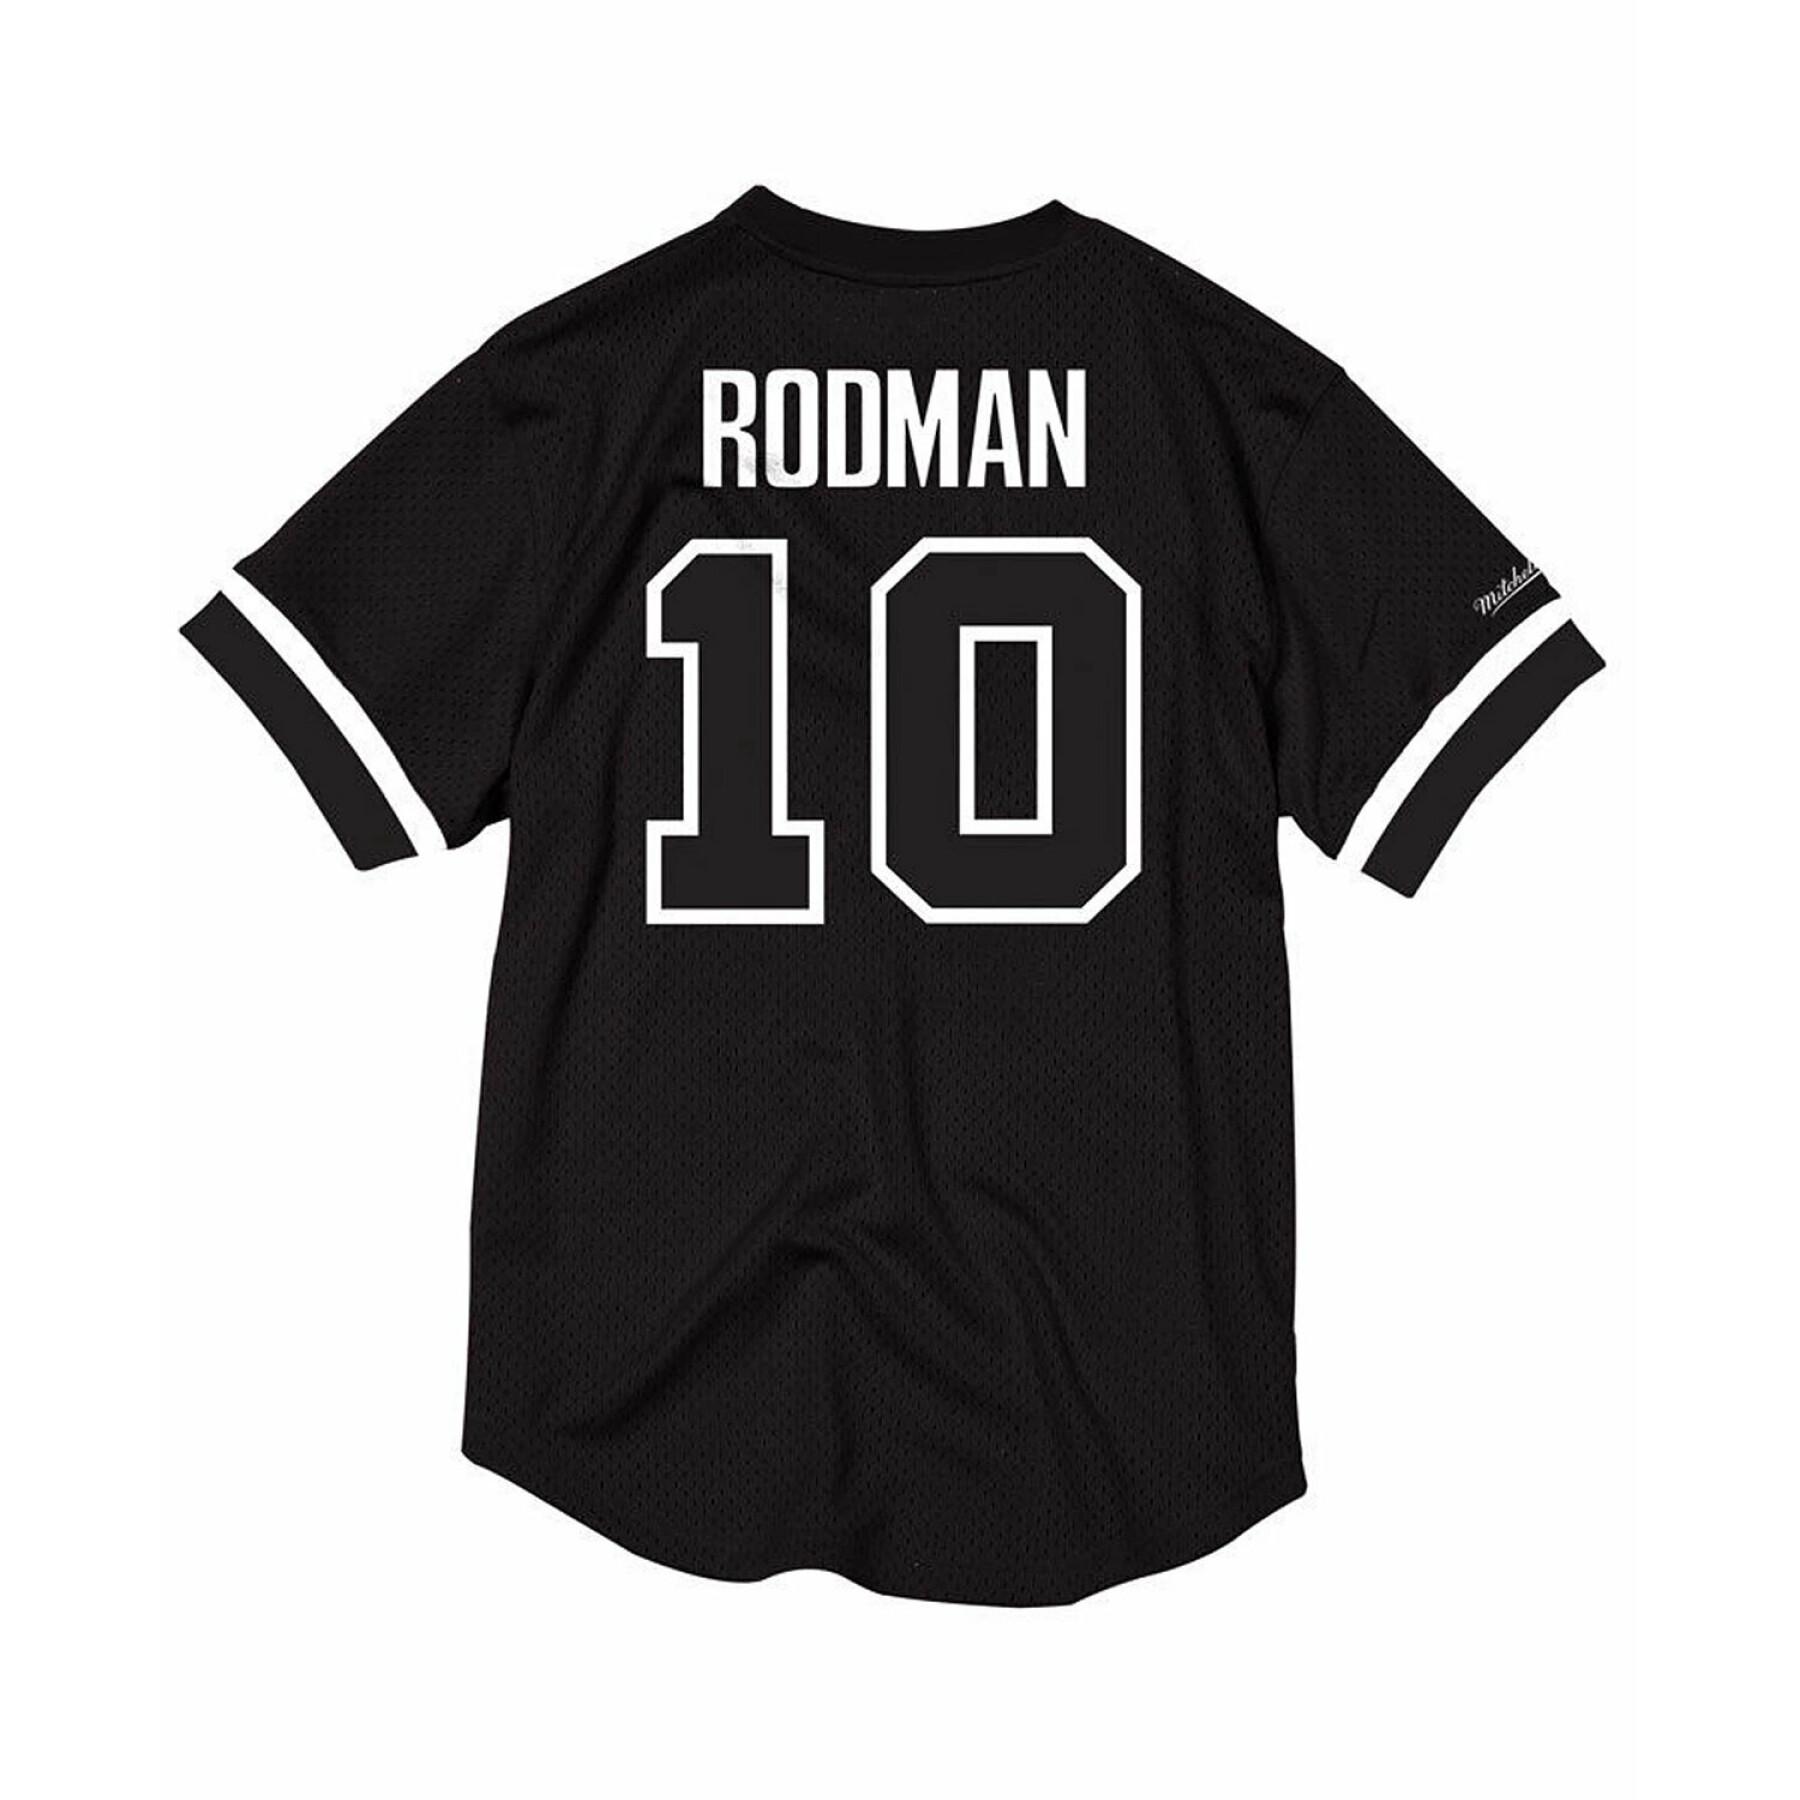 T-shirt Detroit Pistons black & white Dennis Rodman